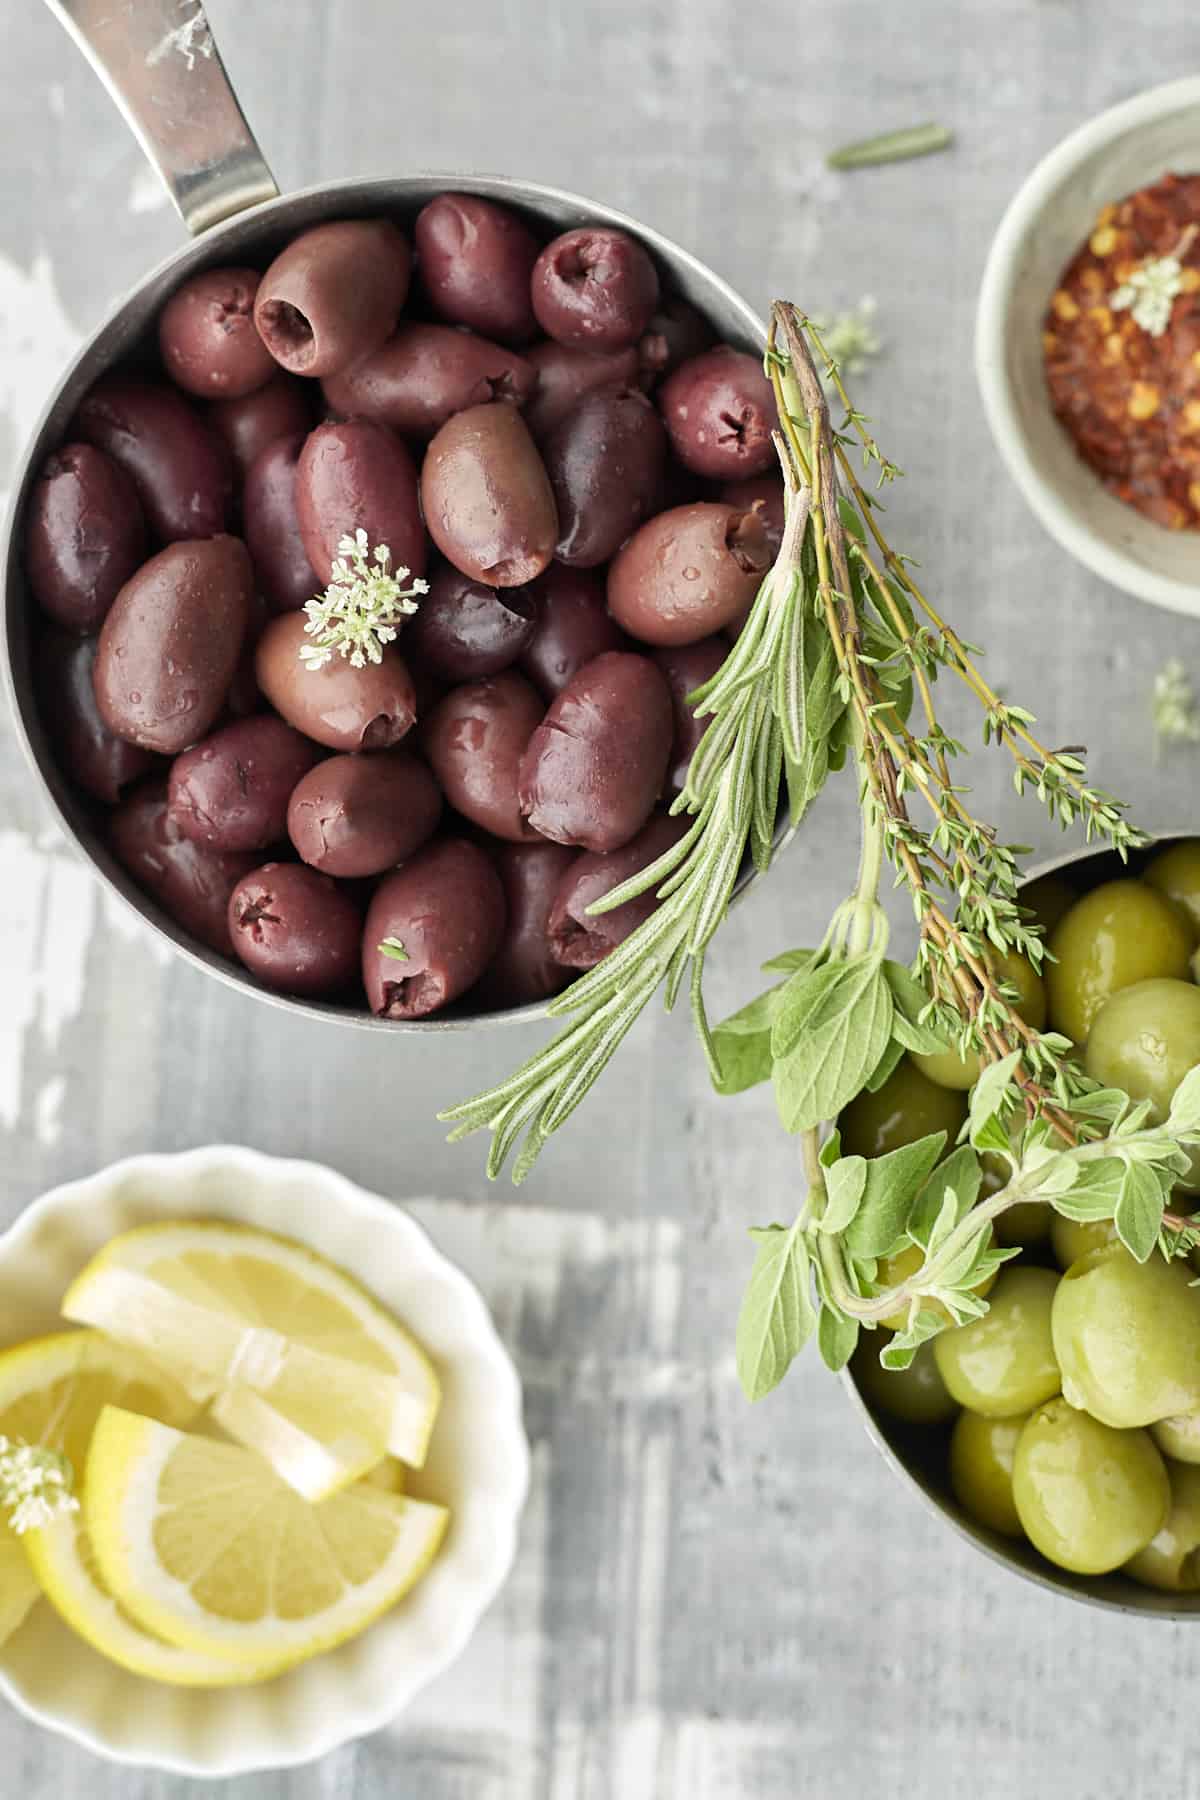 red olives, green olives, spices, and lemon wedges